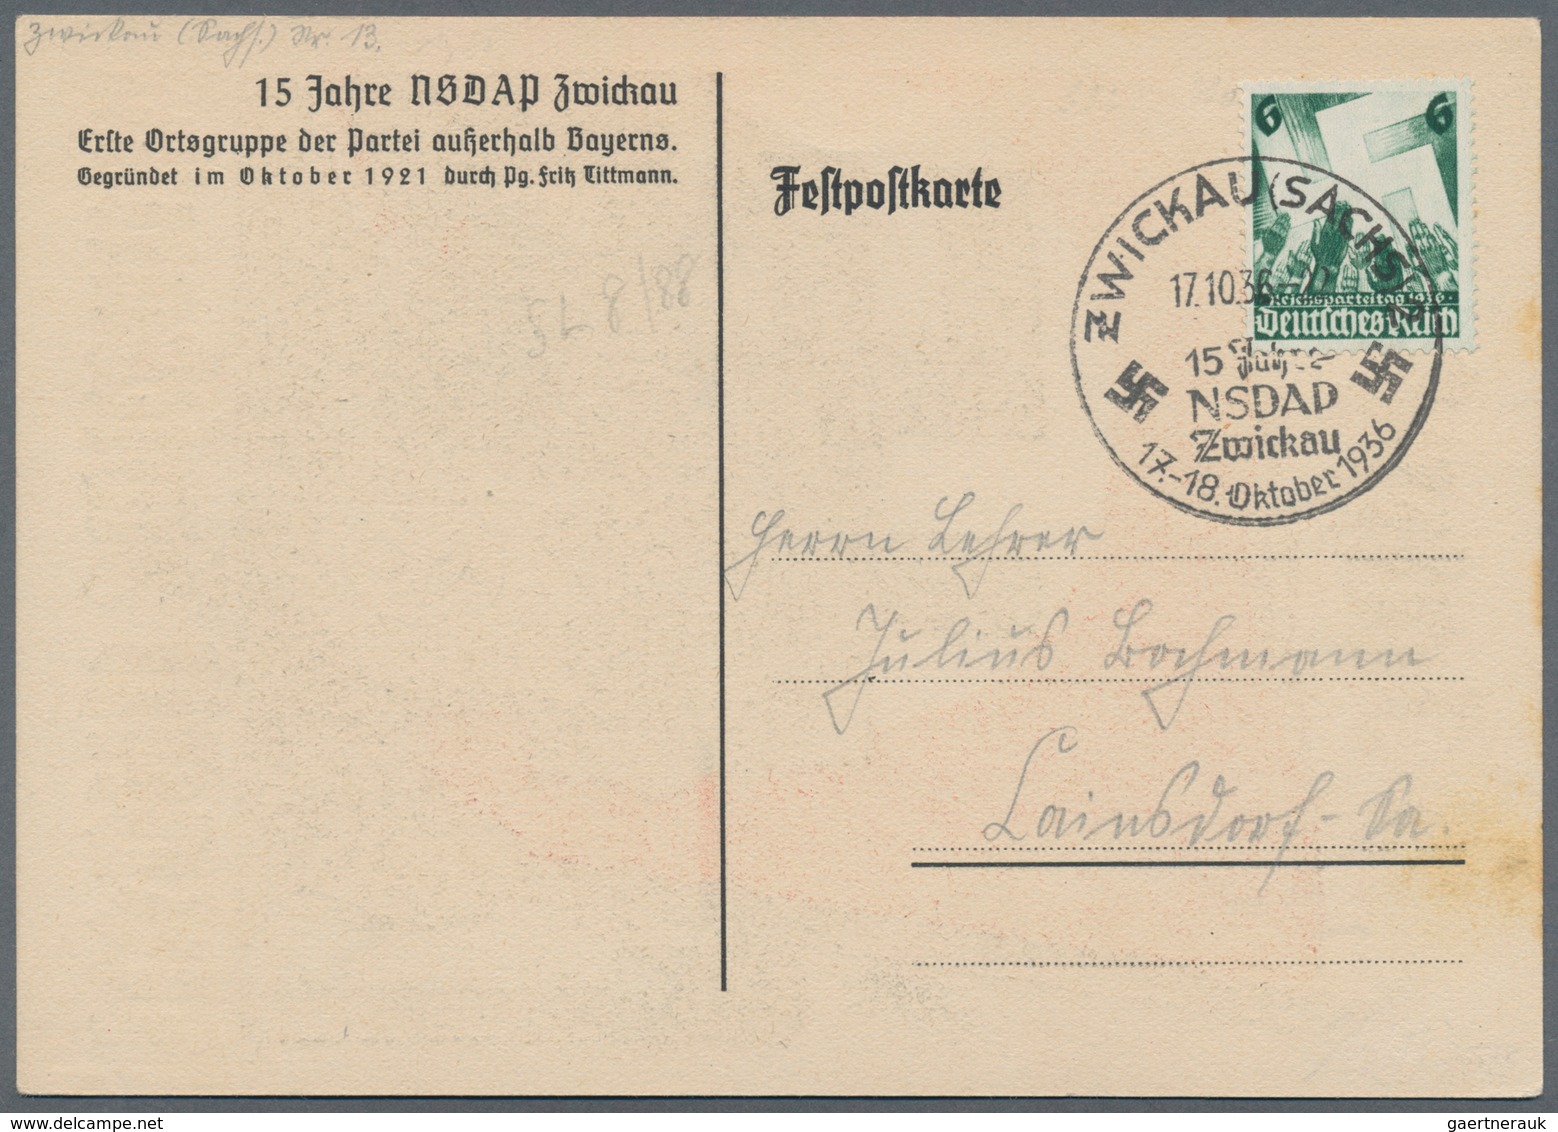 Ansichtskarten: Propaganda: 1936. Scarce 15th Anniversary Zwickau Nazi Party SA Celebration For Zwic - Parteien & Wahlen